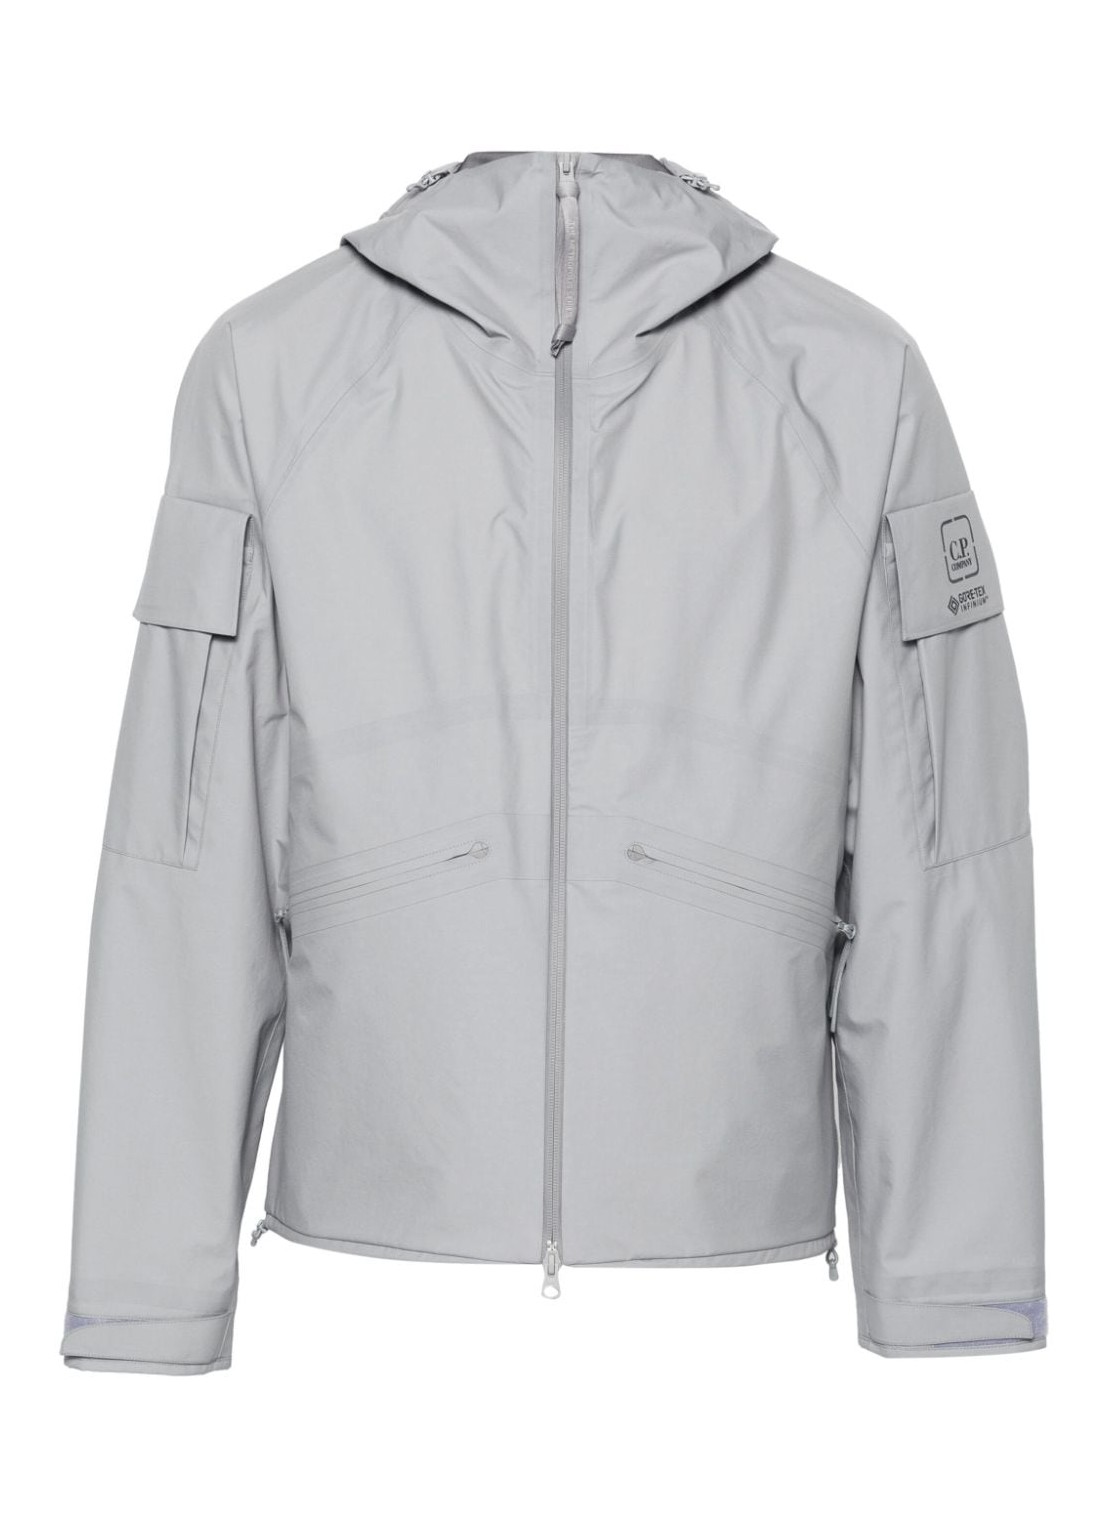 Outerwear c.p.company outerwear manmetropolis series gore-tex infinium hooded jacket - 16clow028a110